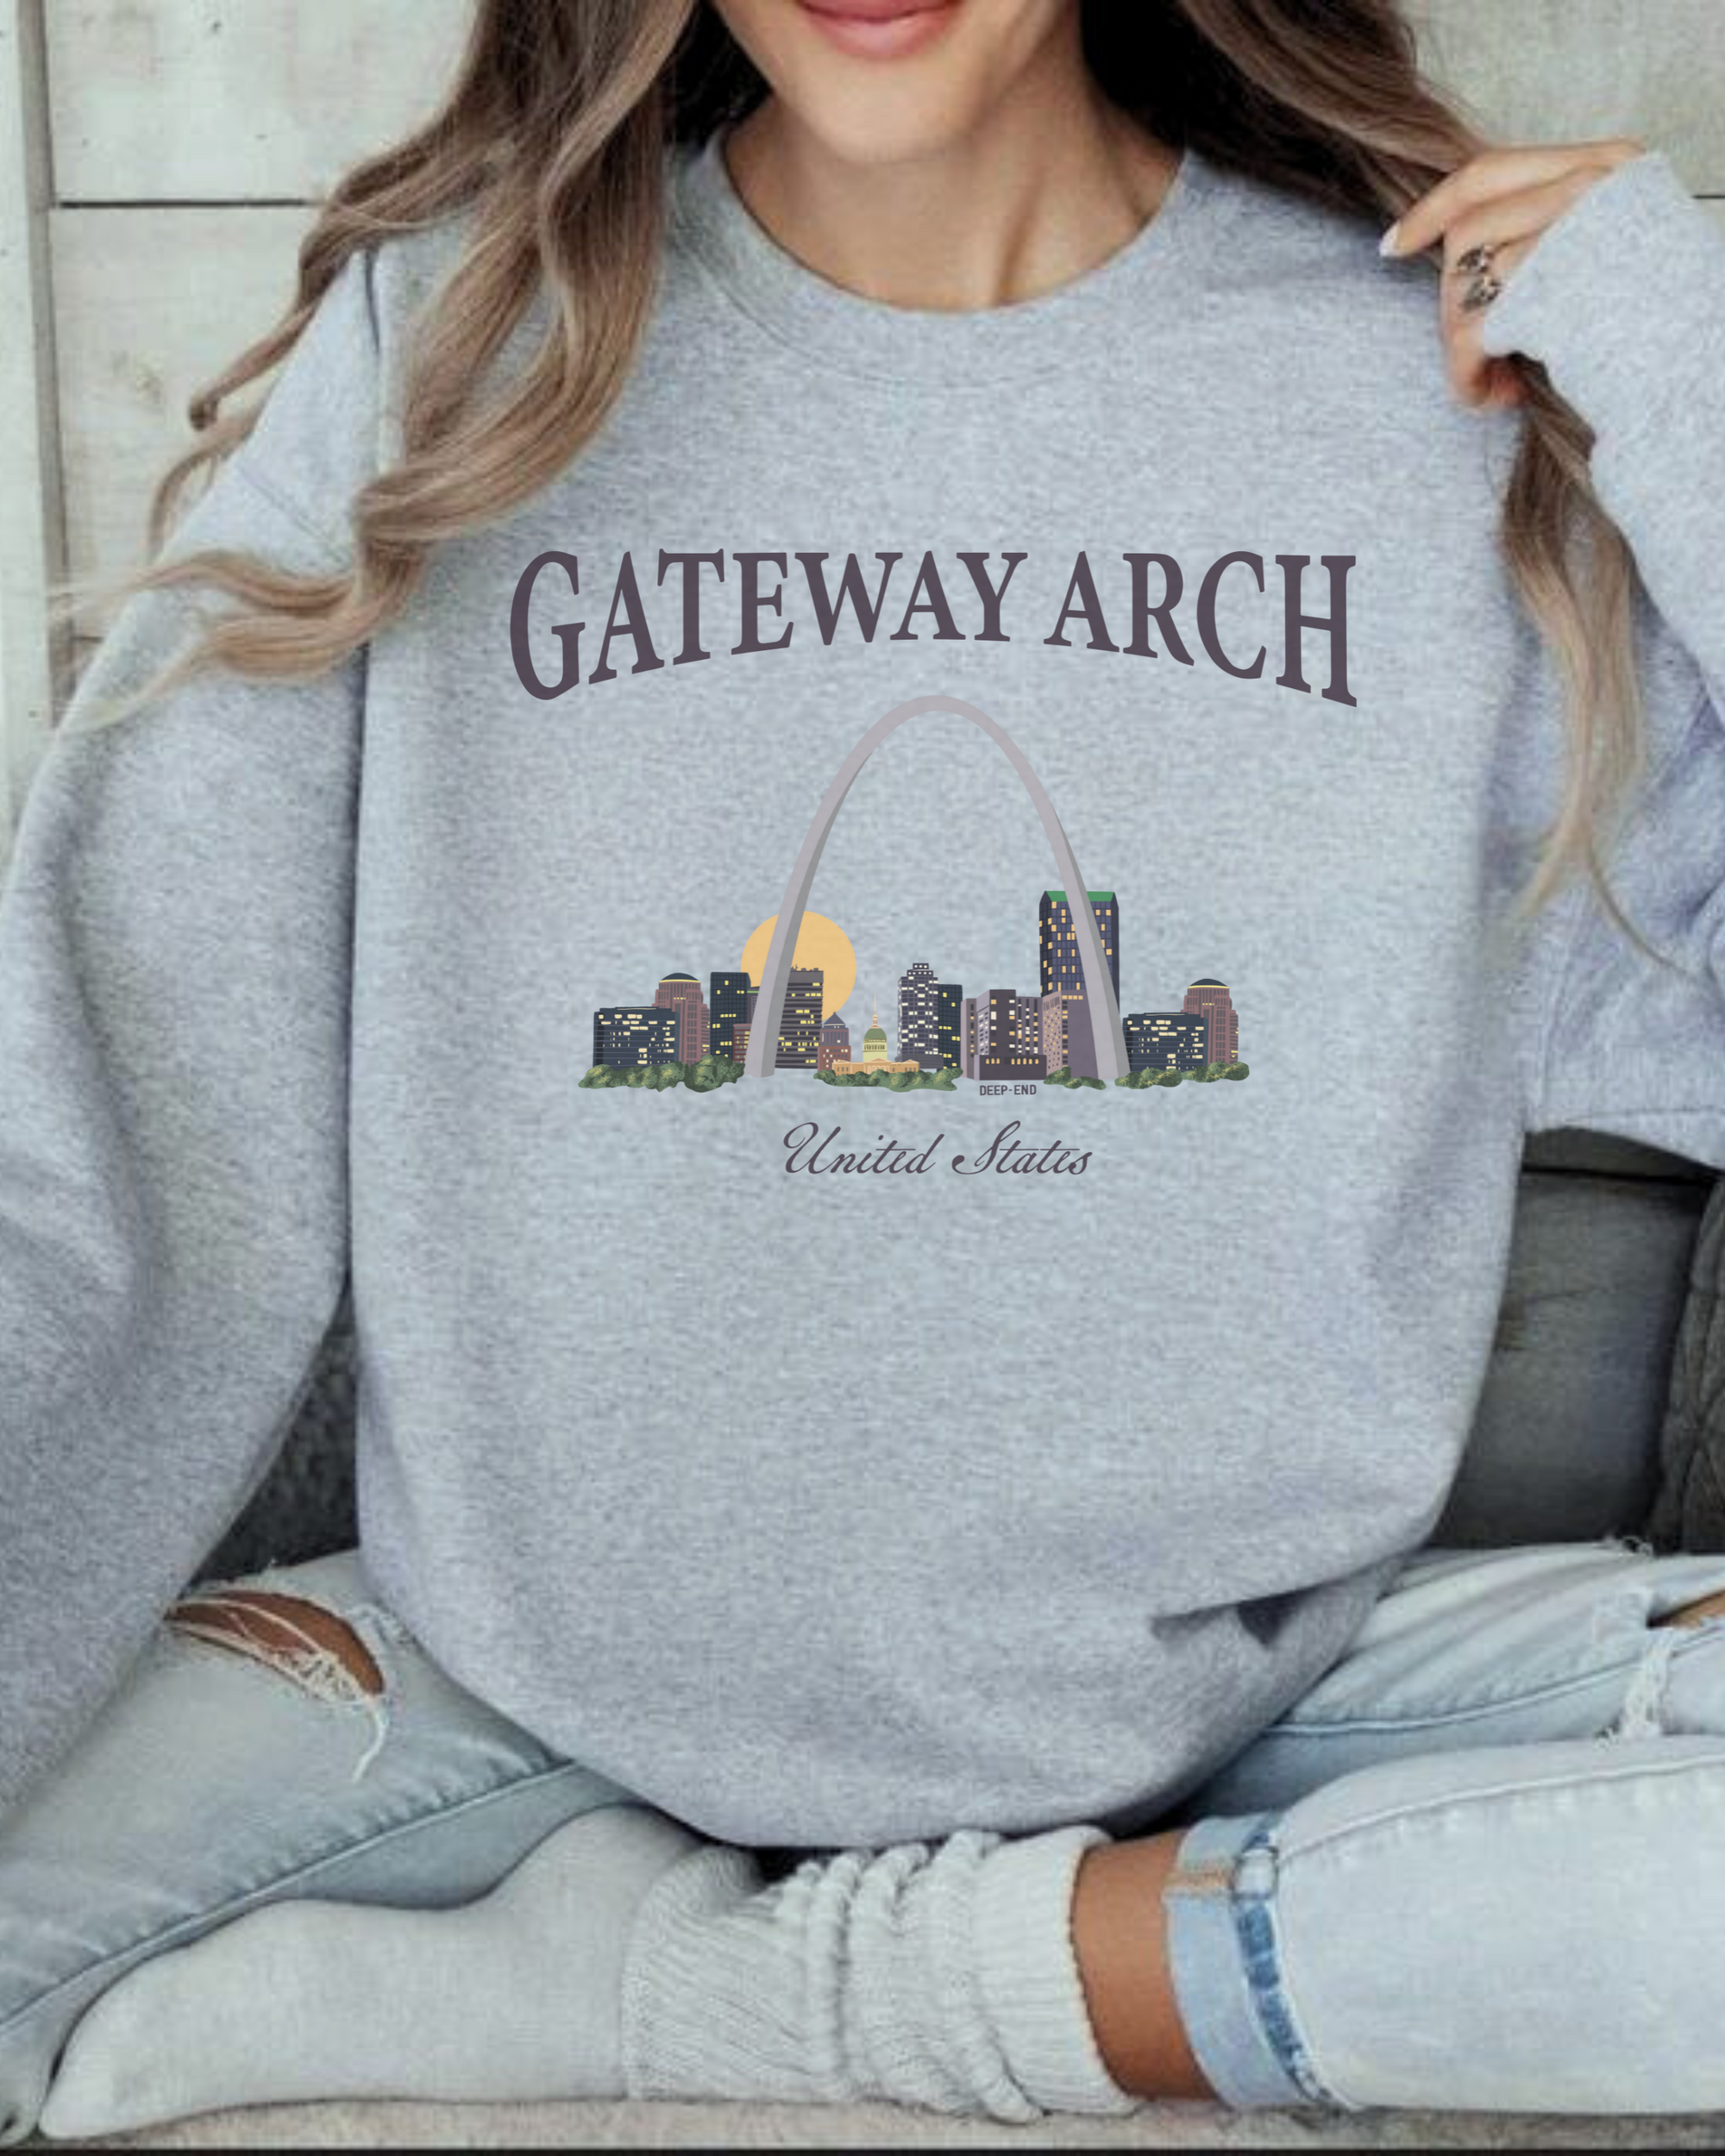 Gateway Arch Classic Unisex Crewneck Sweatshirt